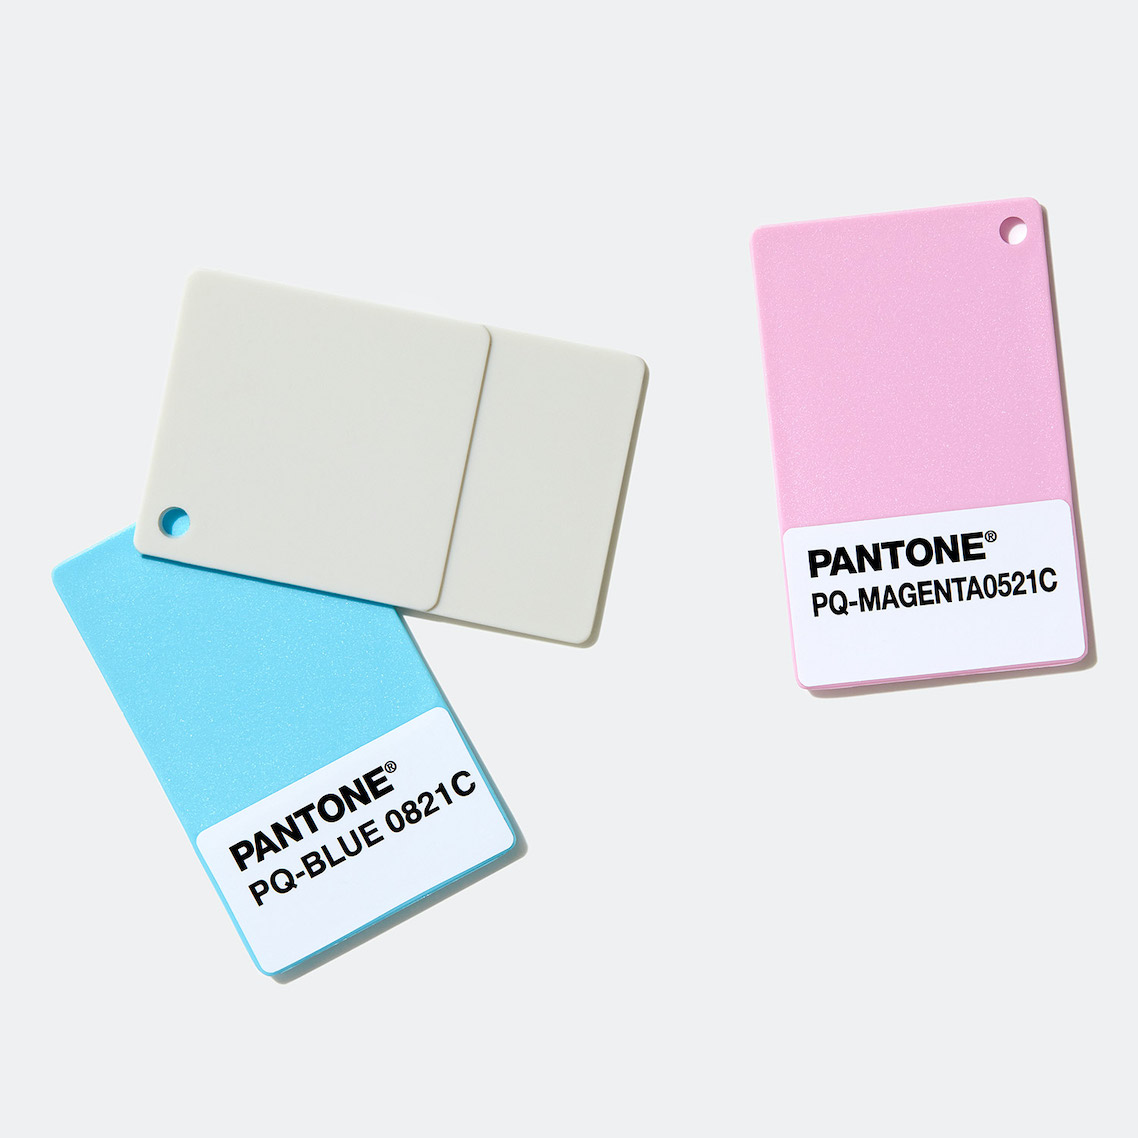 pantone plastic reference, pantone plastic numbers, buy pantone plastic